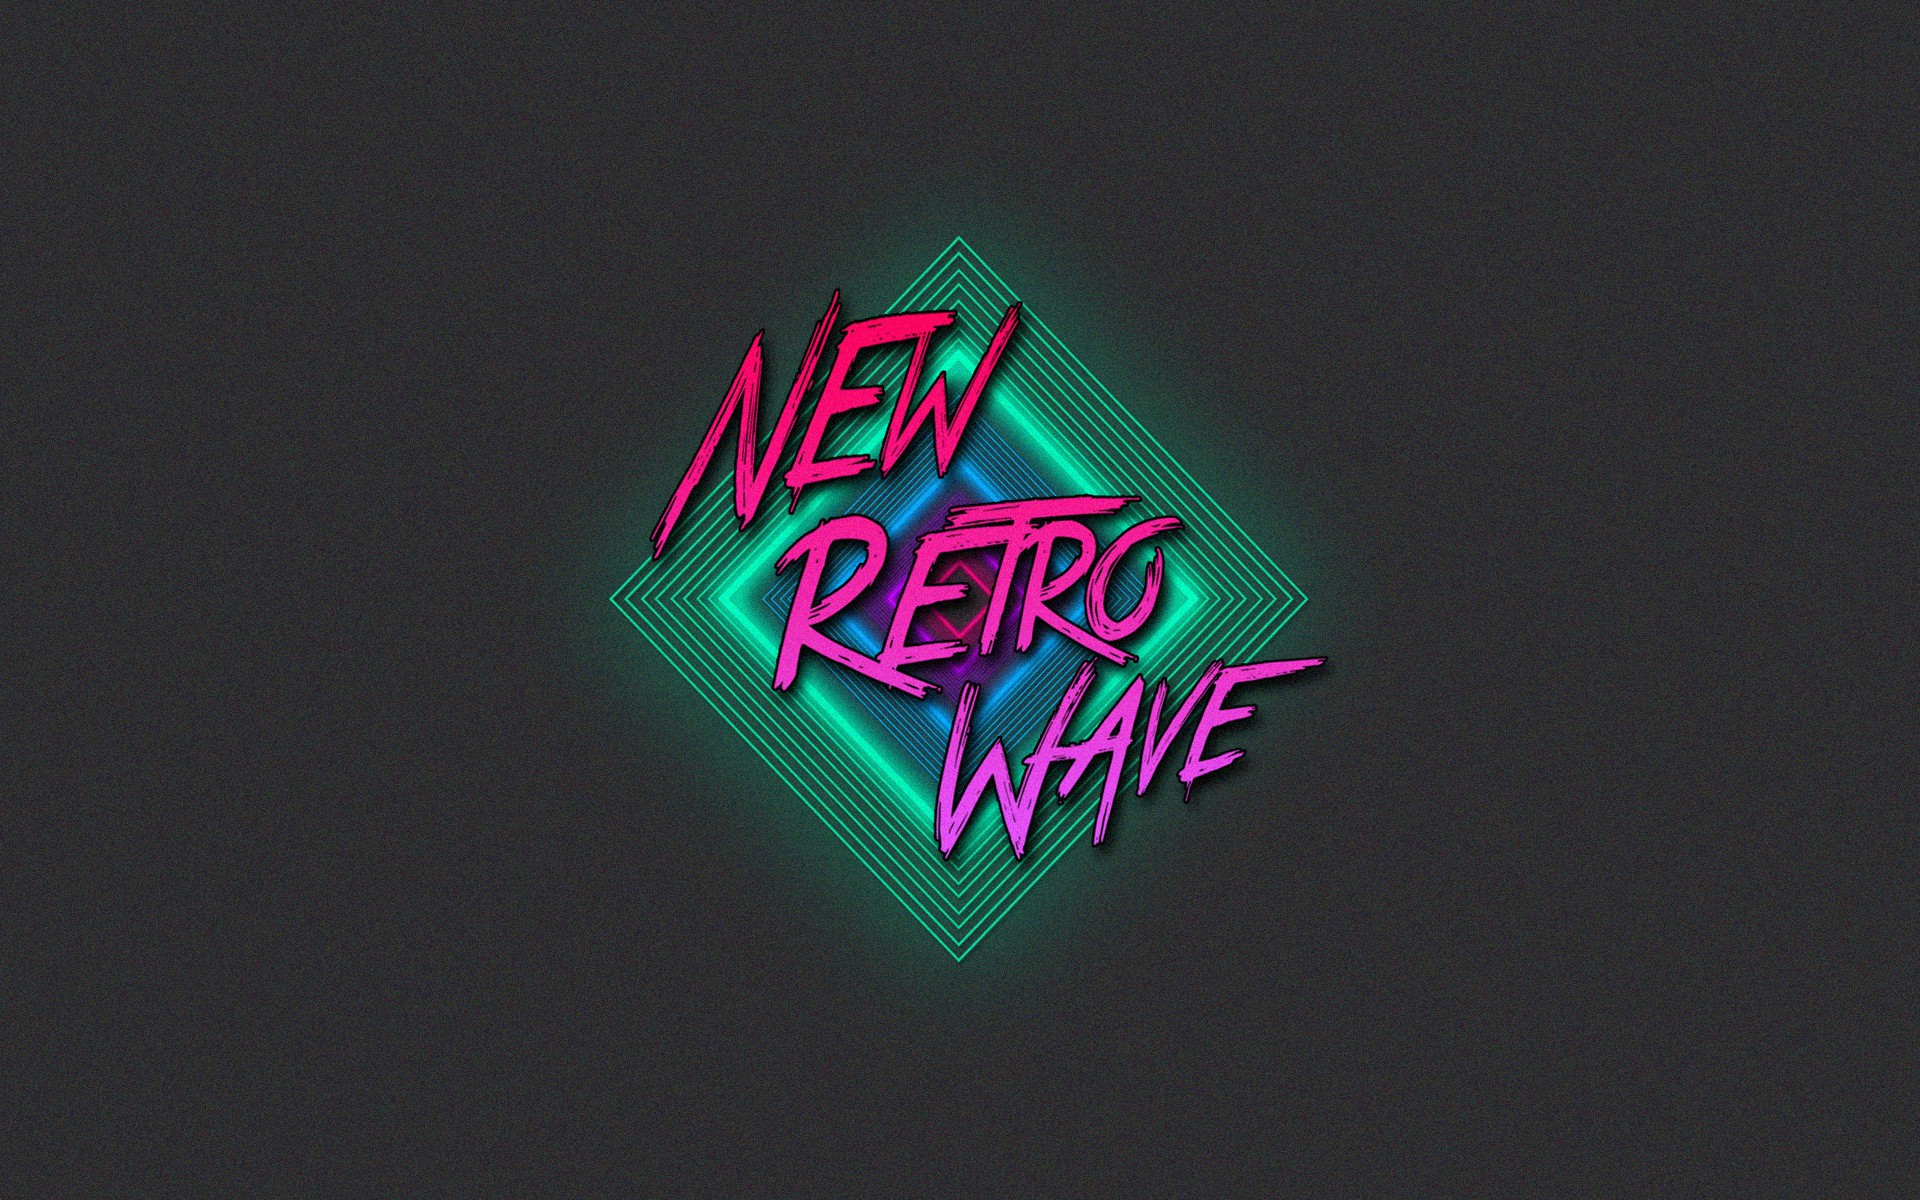 Neon Retro Wave 1920x1200